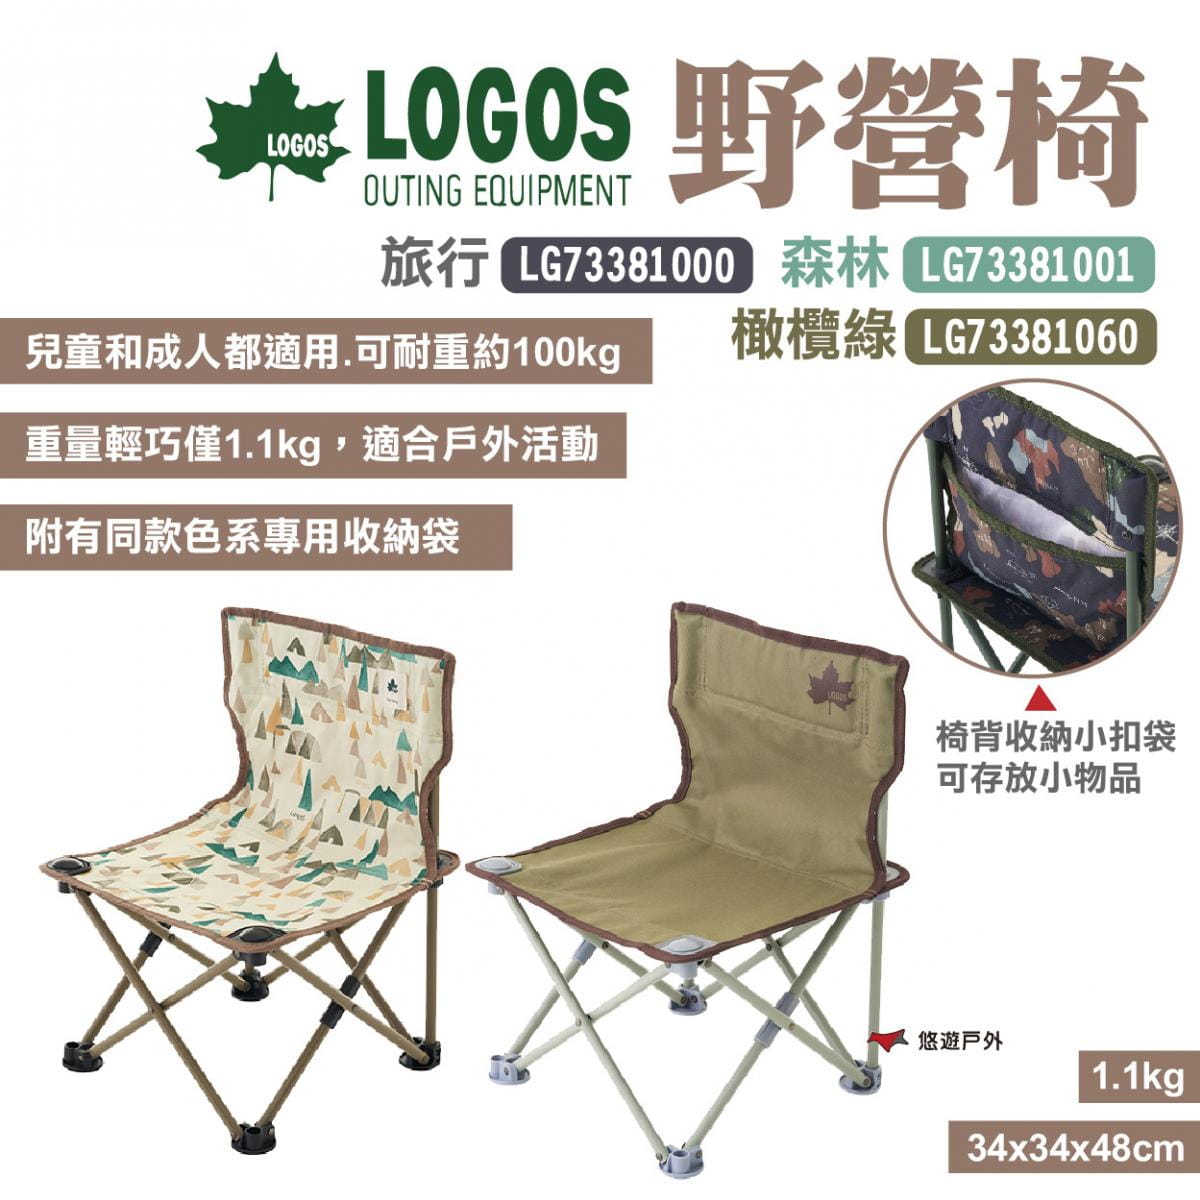 【LOGOS】野營椅LG73381000.01.60 (悠遊戶外) 0